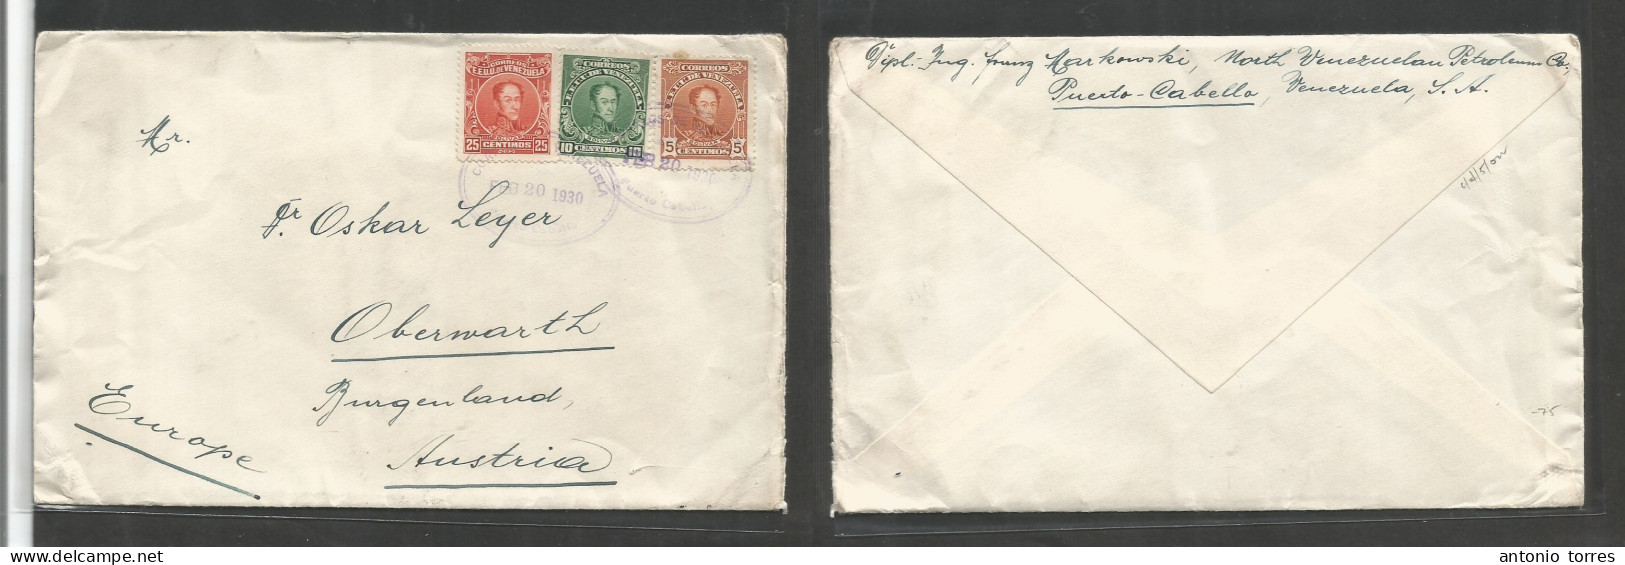 Venezuela. 1930 (20 Febr) Puerto Cabello - Austria, Oberwarth. Tricolor Multifkd Env, Oval Lilac Town Ds Cachets. At 40c - Venezuela